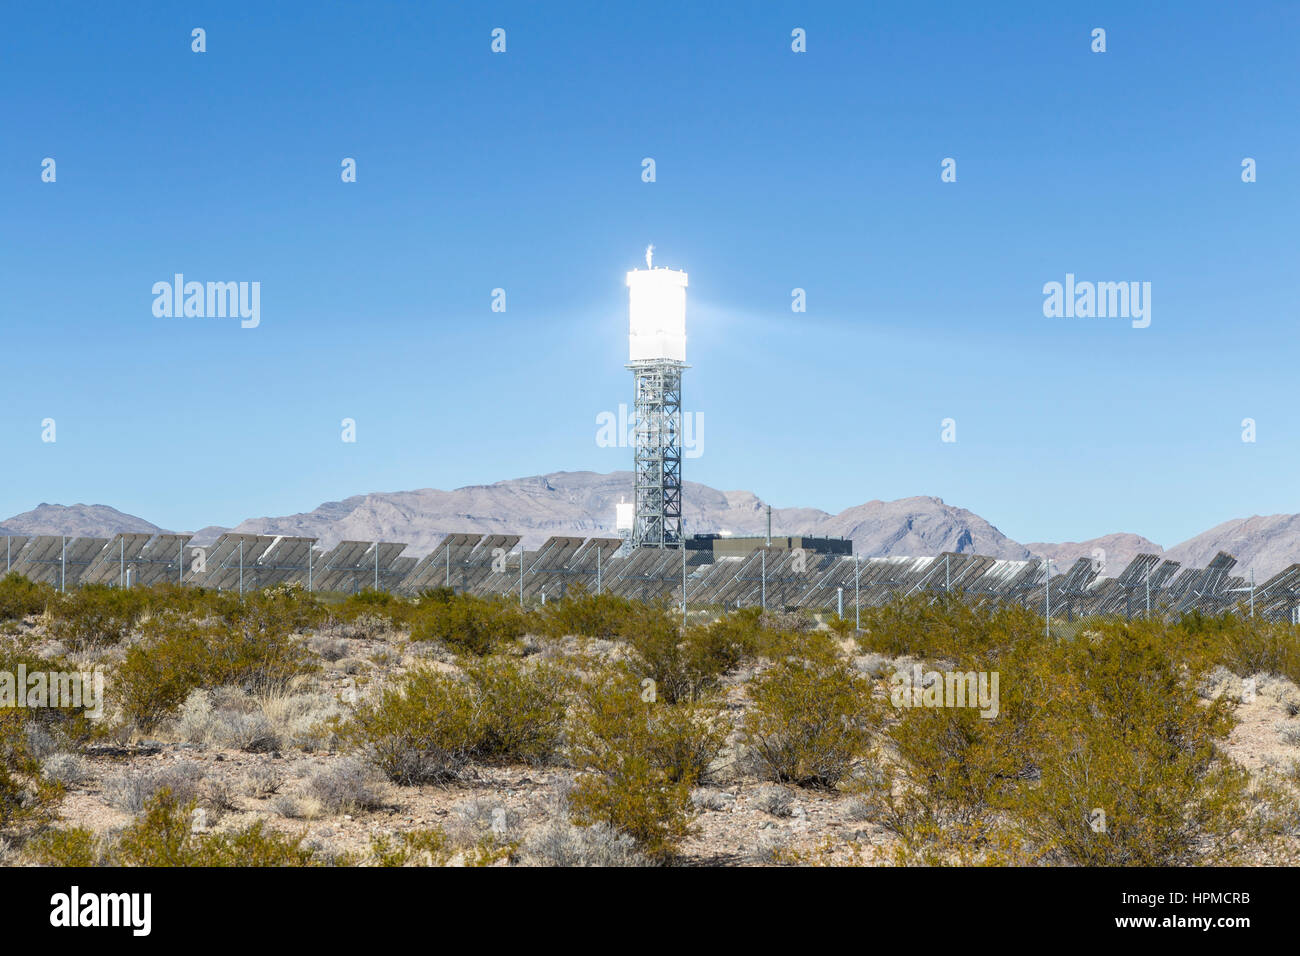 Ivanpah, California, USA - November 26, 2014:  Solar reflective power tower at the Ivanpah solar power station in the Mojave desert. Stock Photo